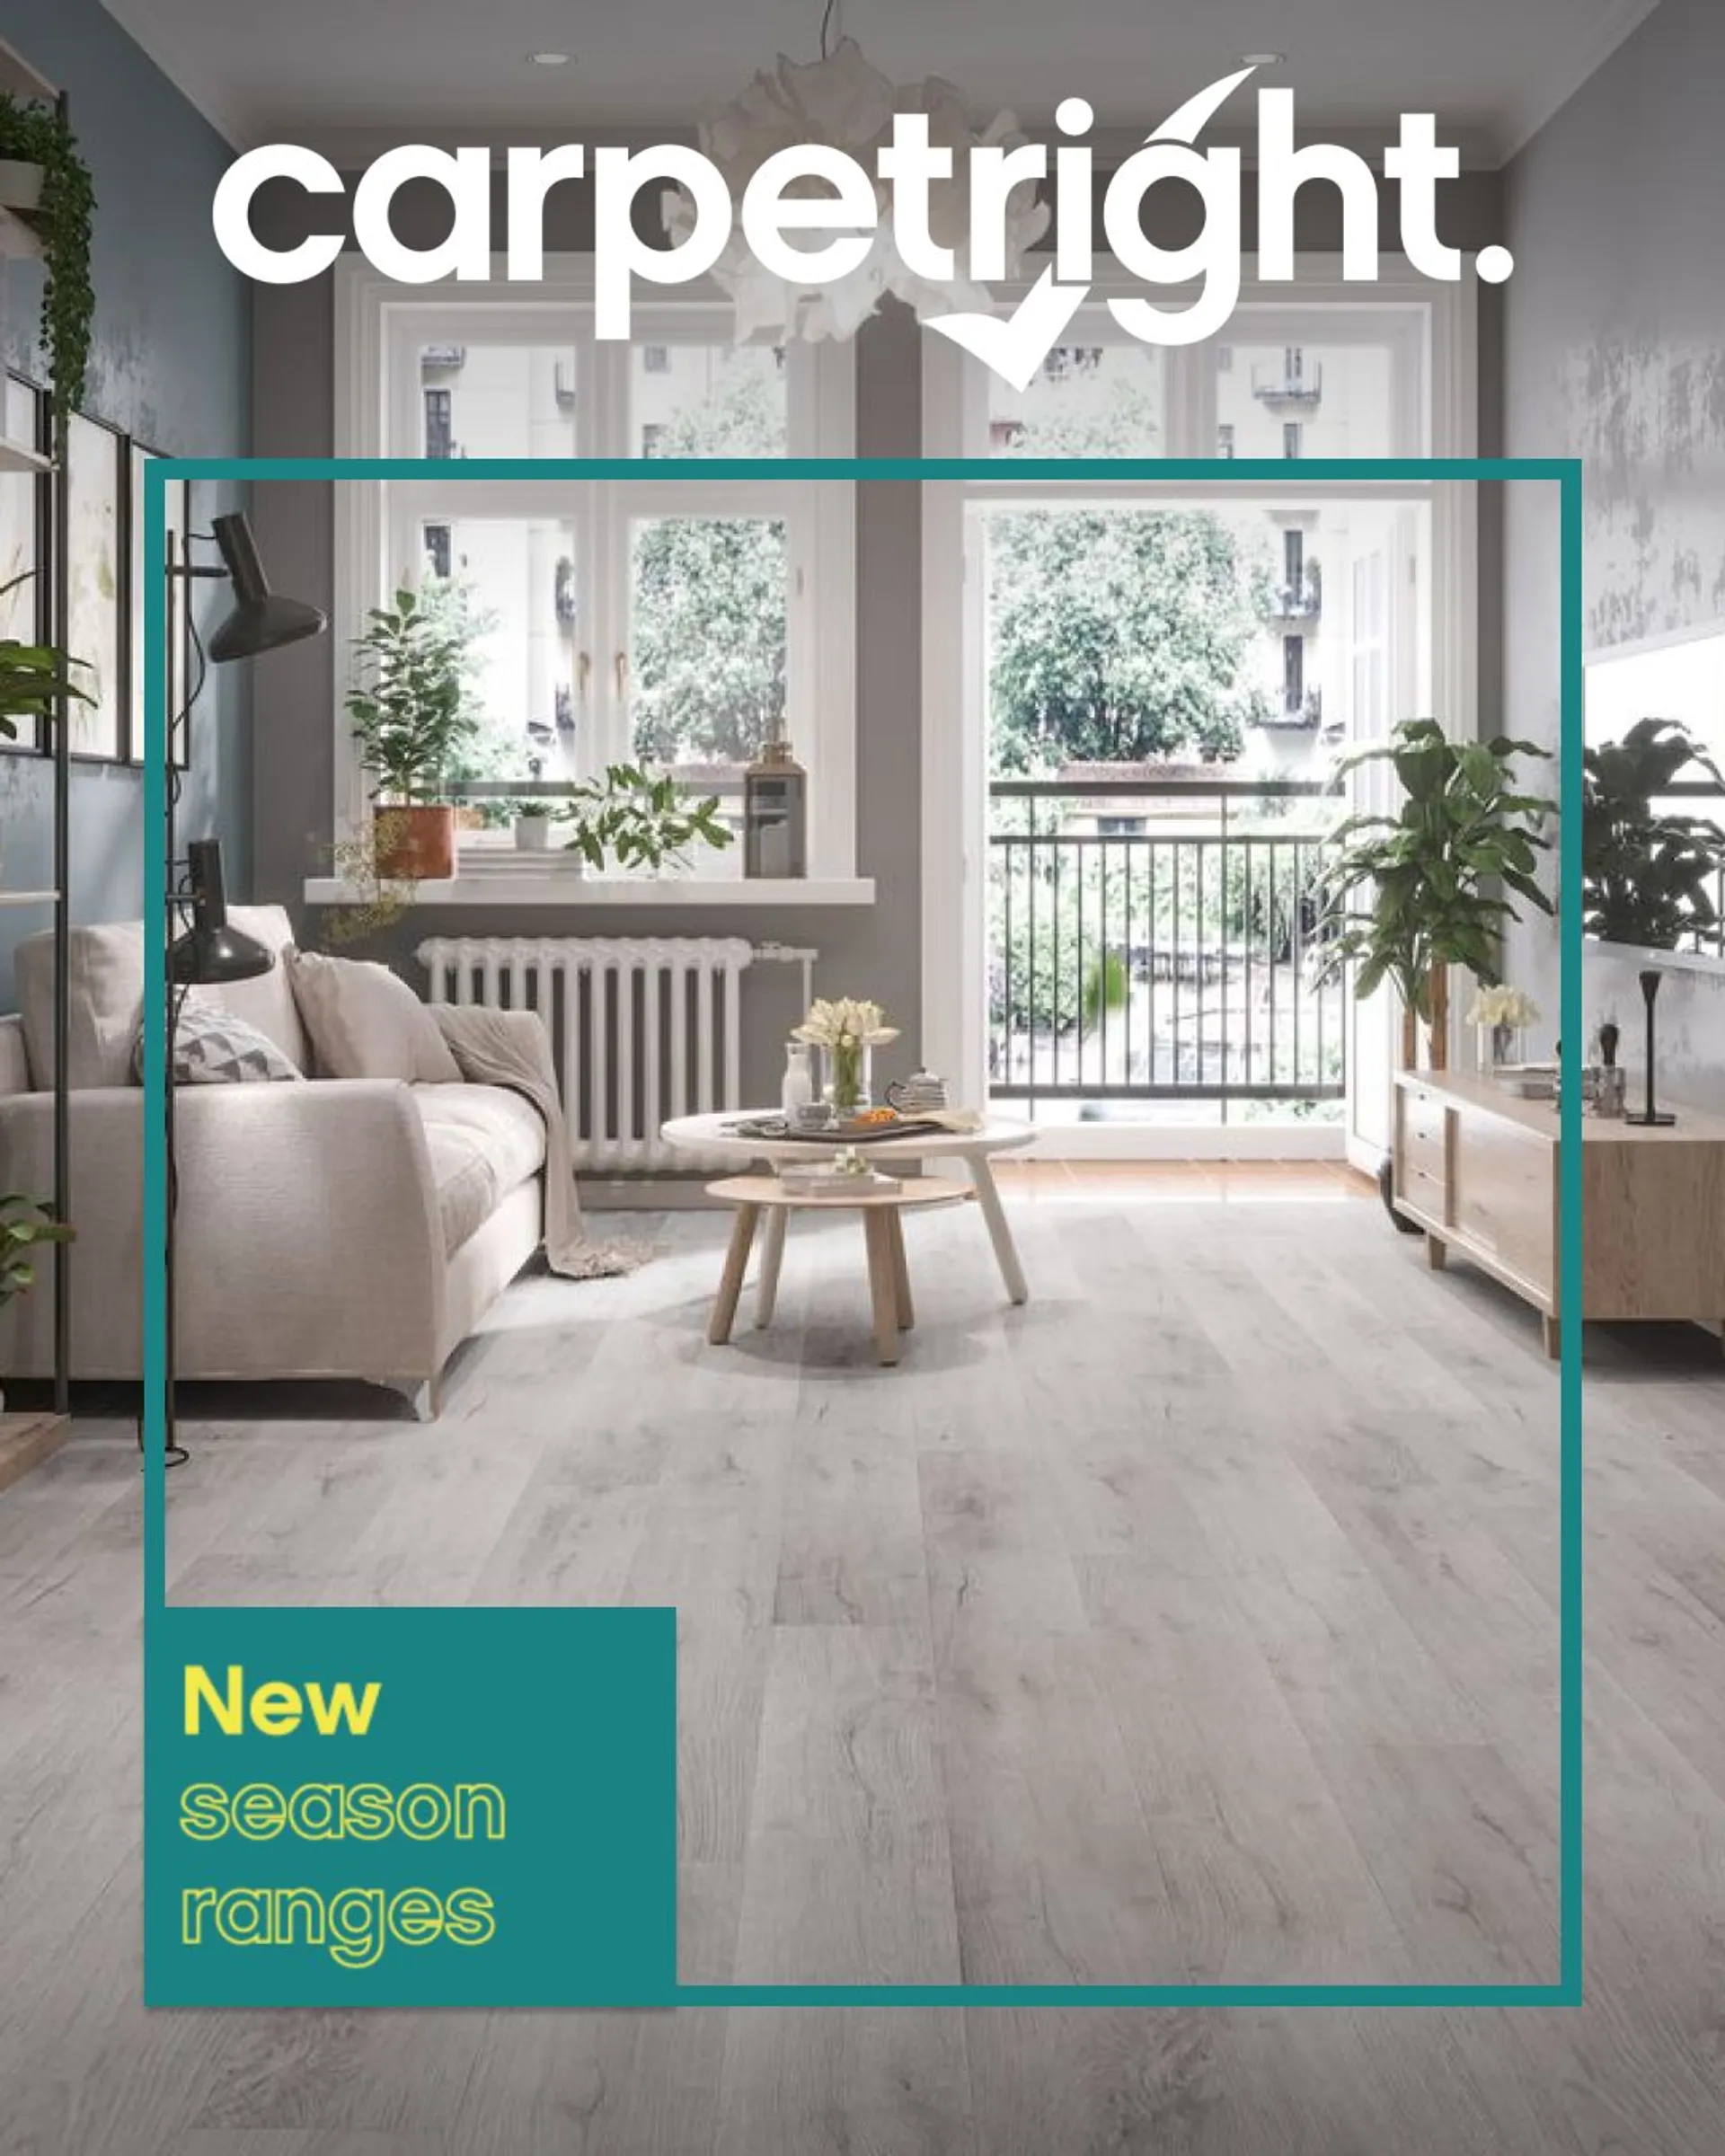 Carpetright - Home